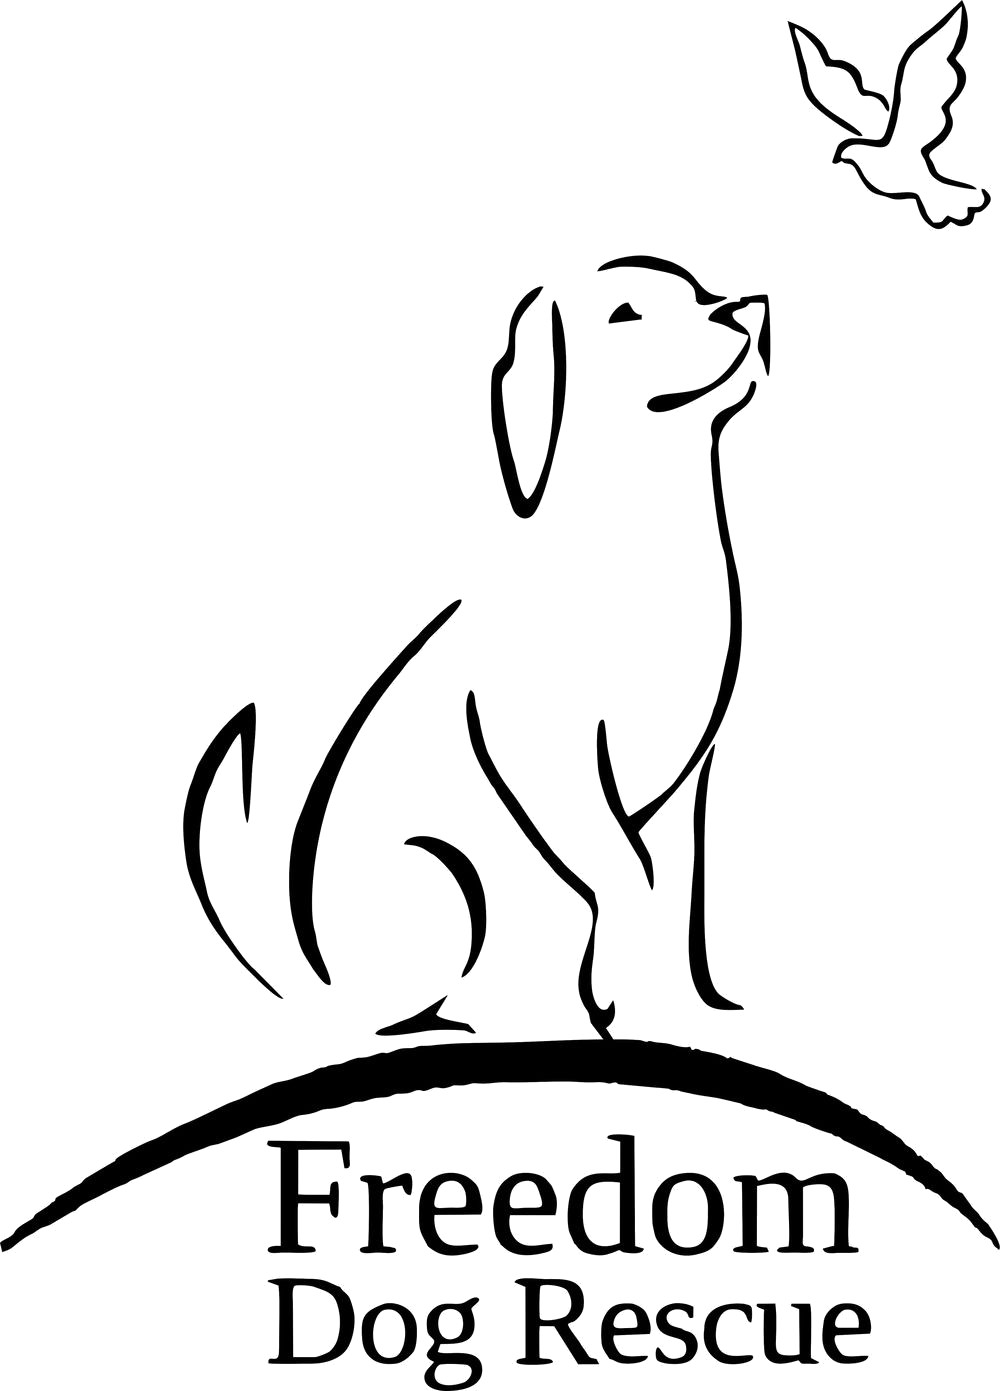 Freedom Dog Rescue